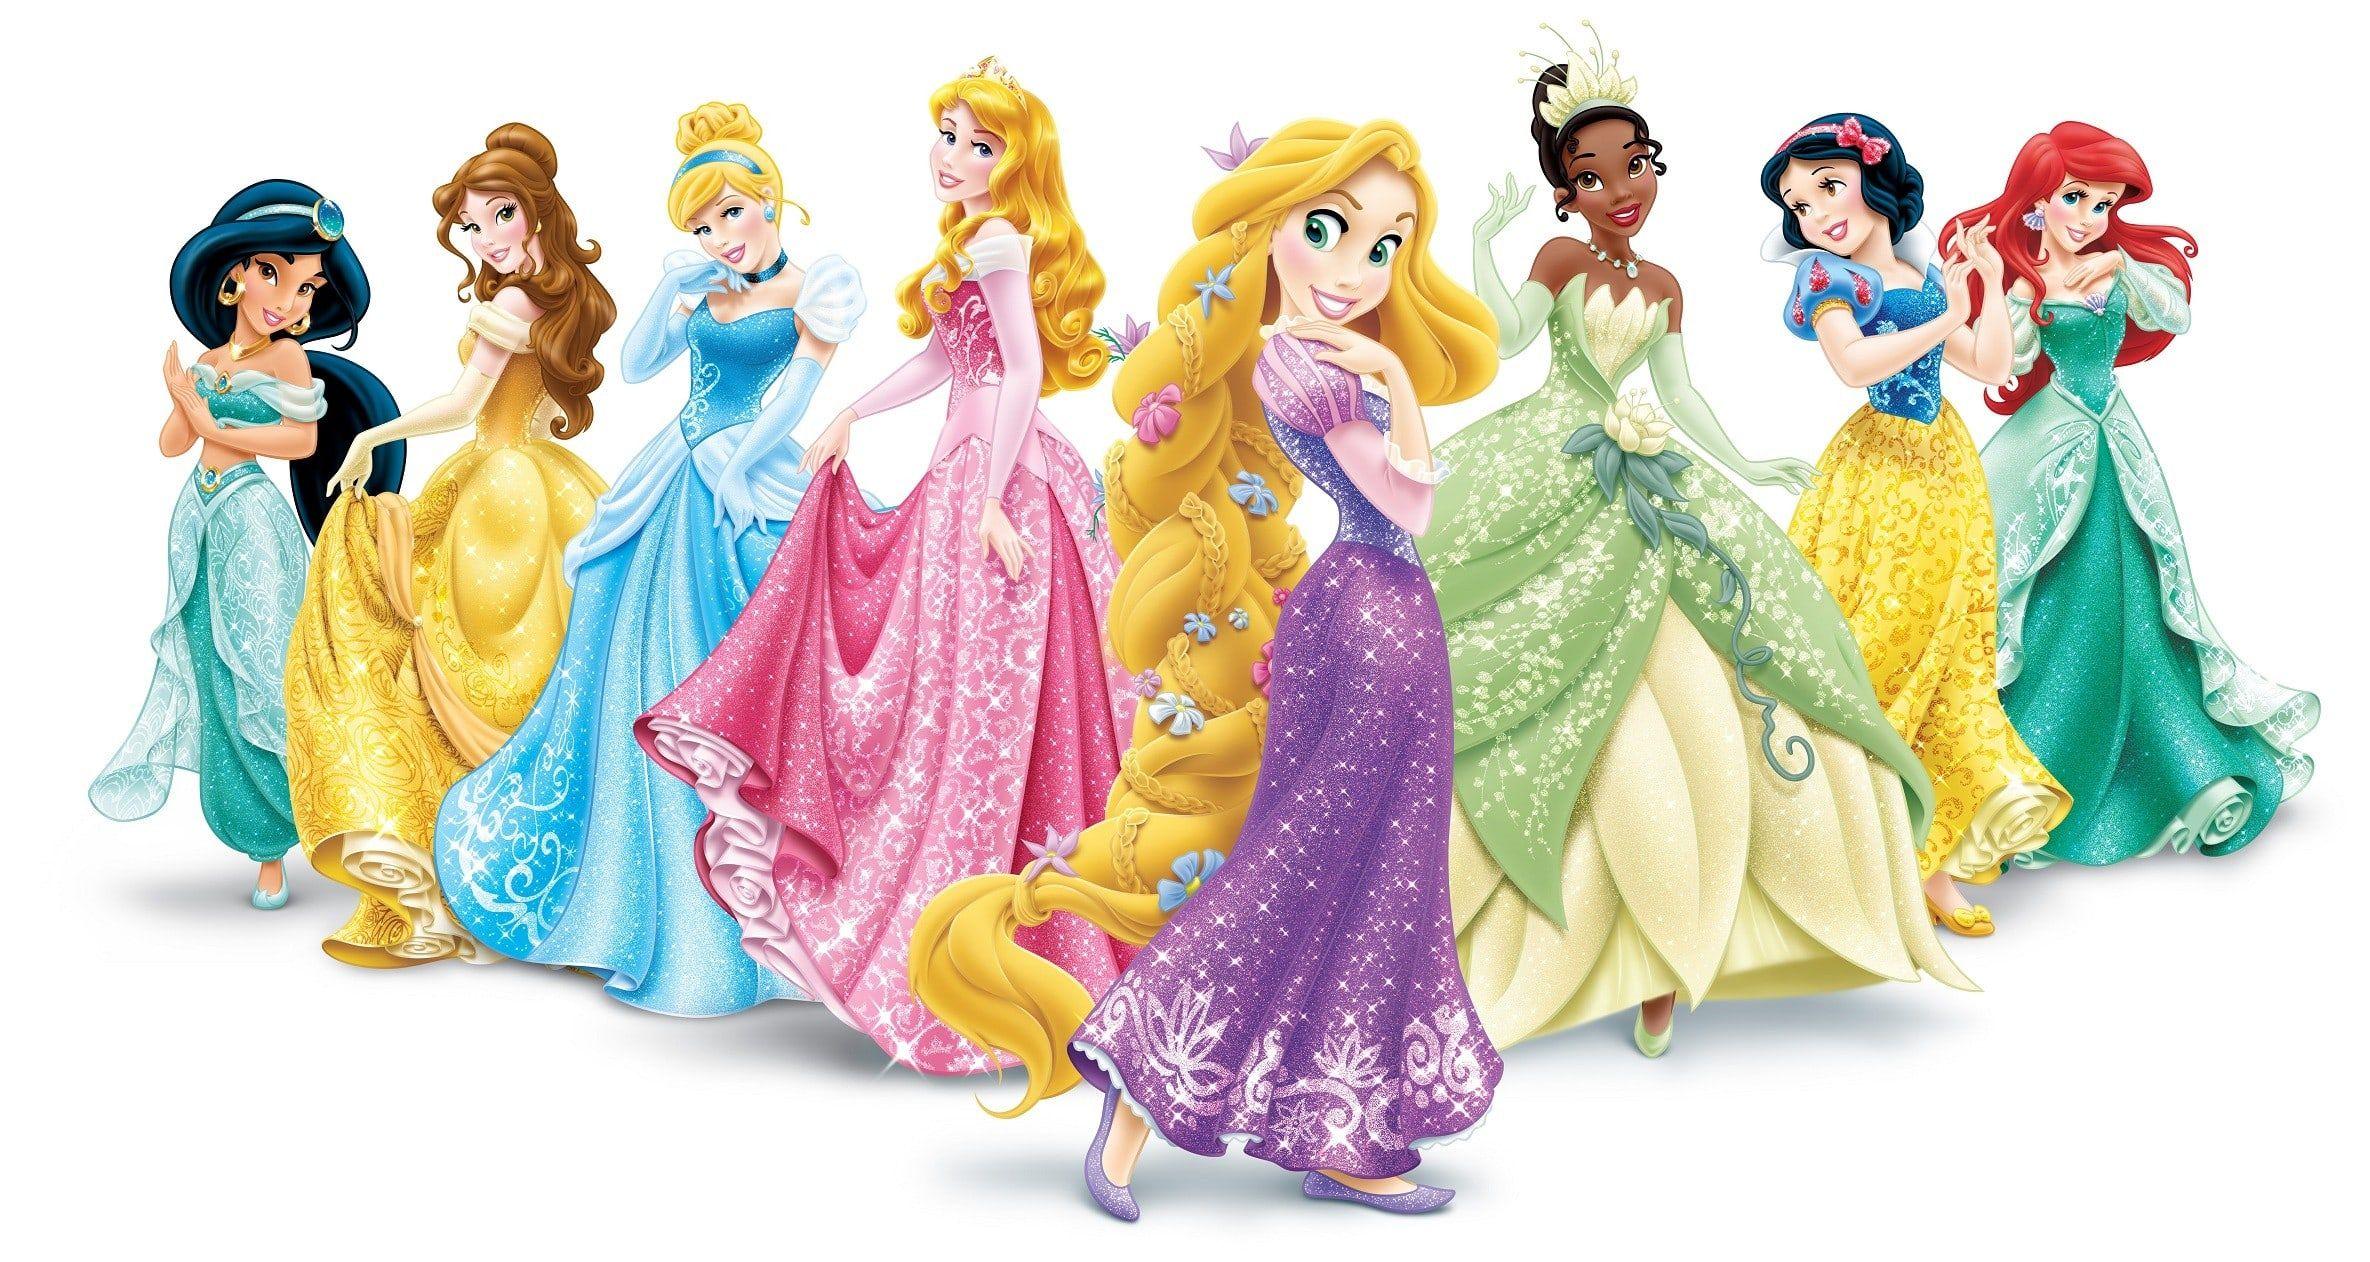 Disney Princess Belle HD Wallpaper Free Download For Image